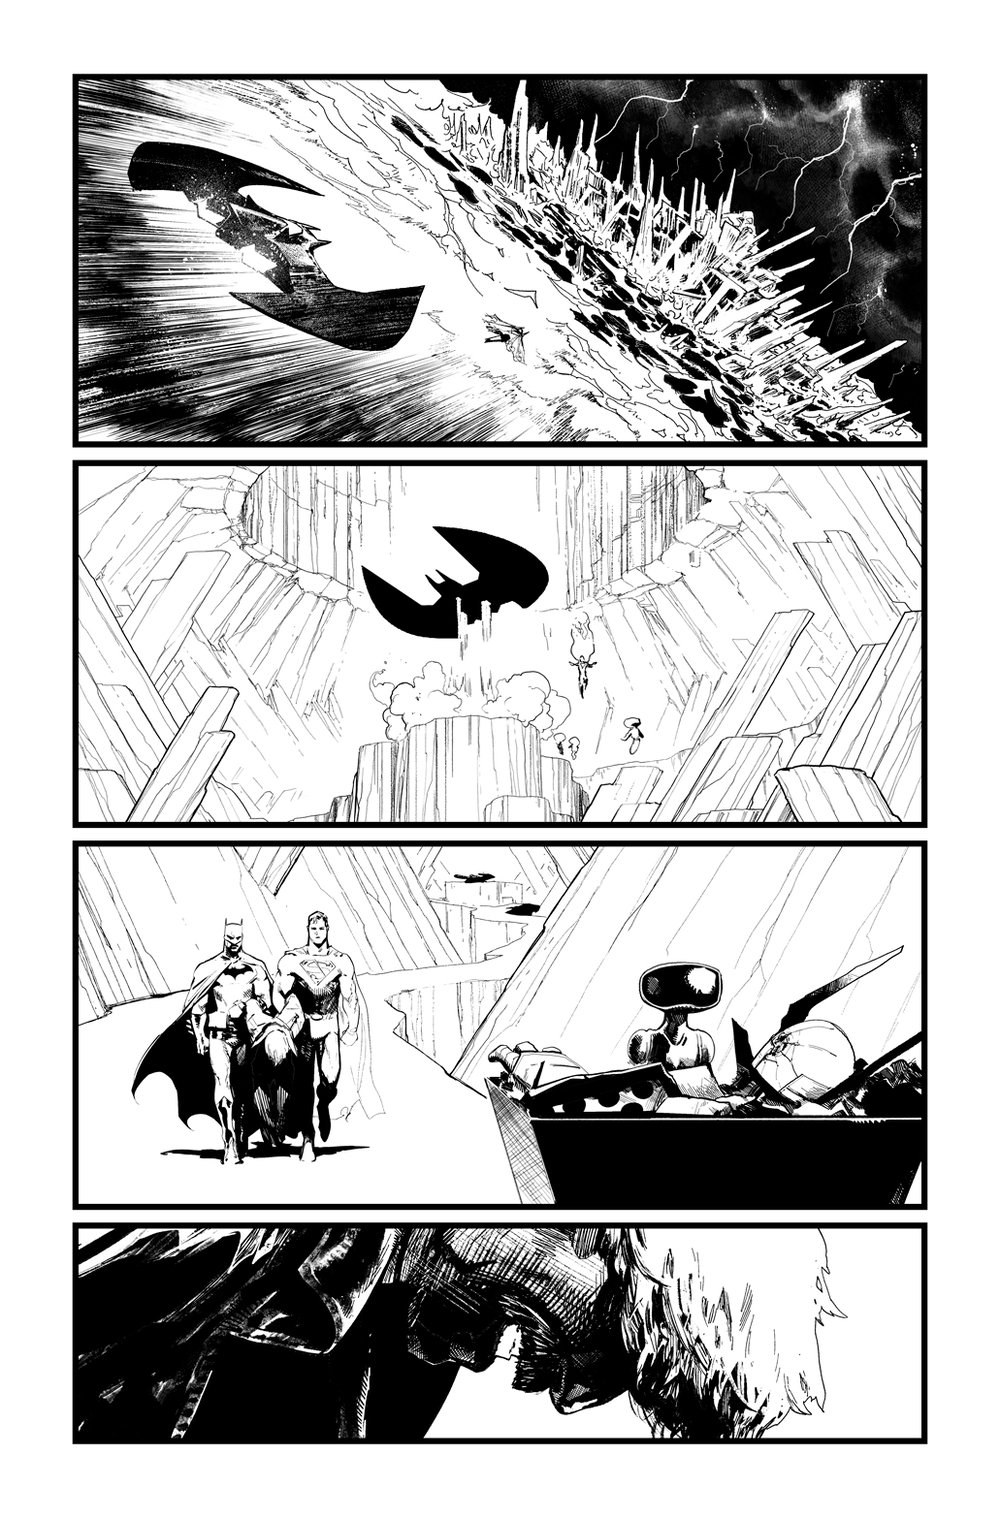 Image of BATMAN/SUPERMAN #3 p.18 ARTIST'S PROOF